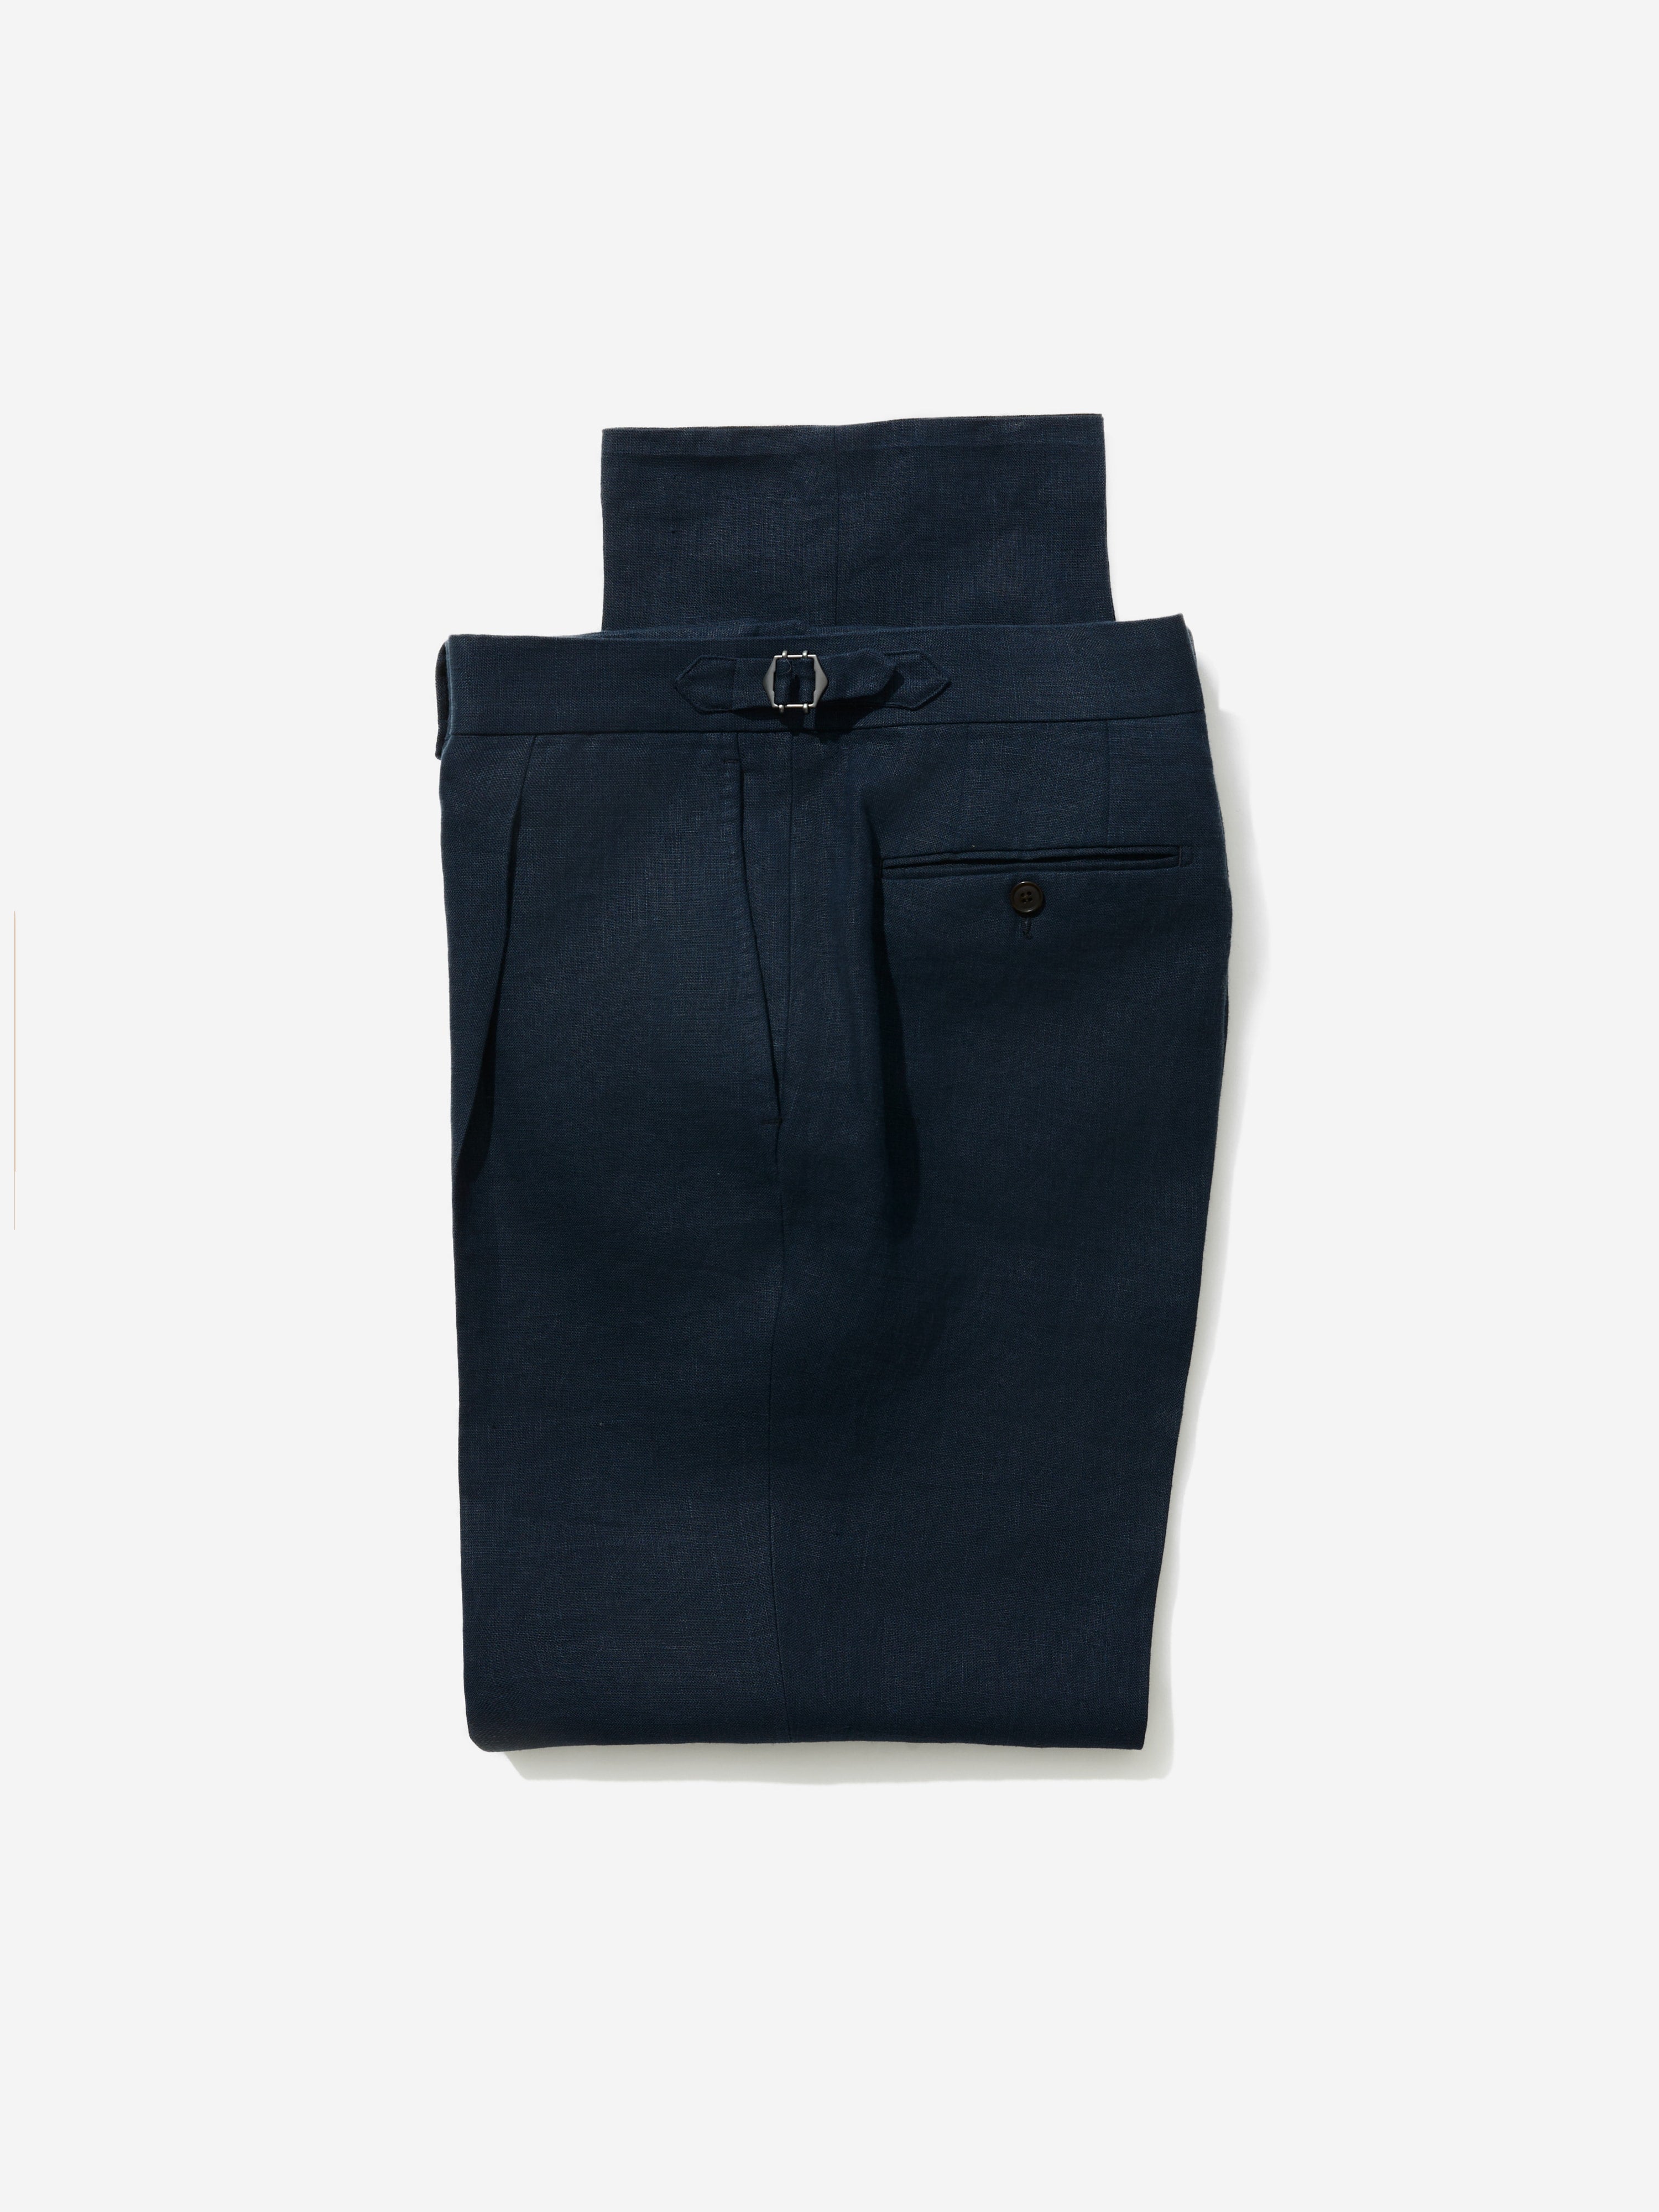 Navy Linen Oscar Trousers (Wide Fit) - Grand Le Mar